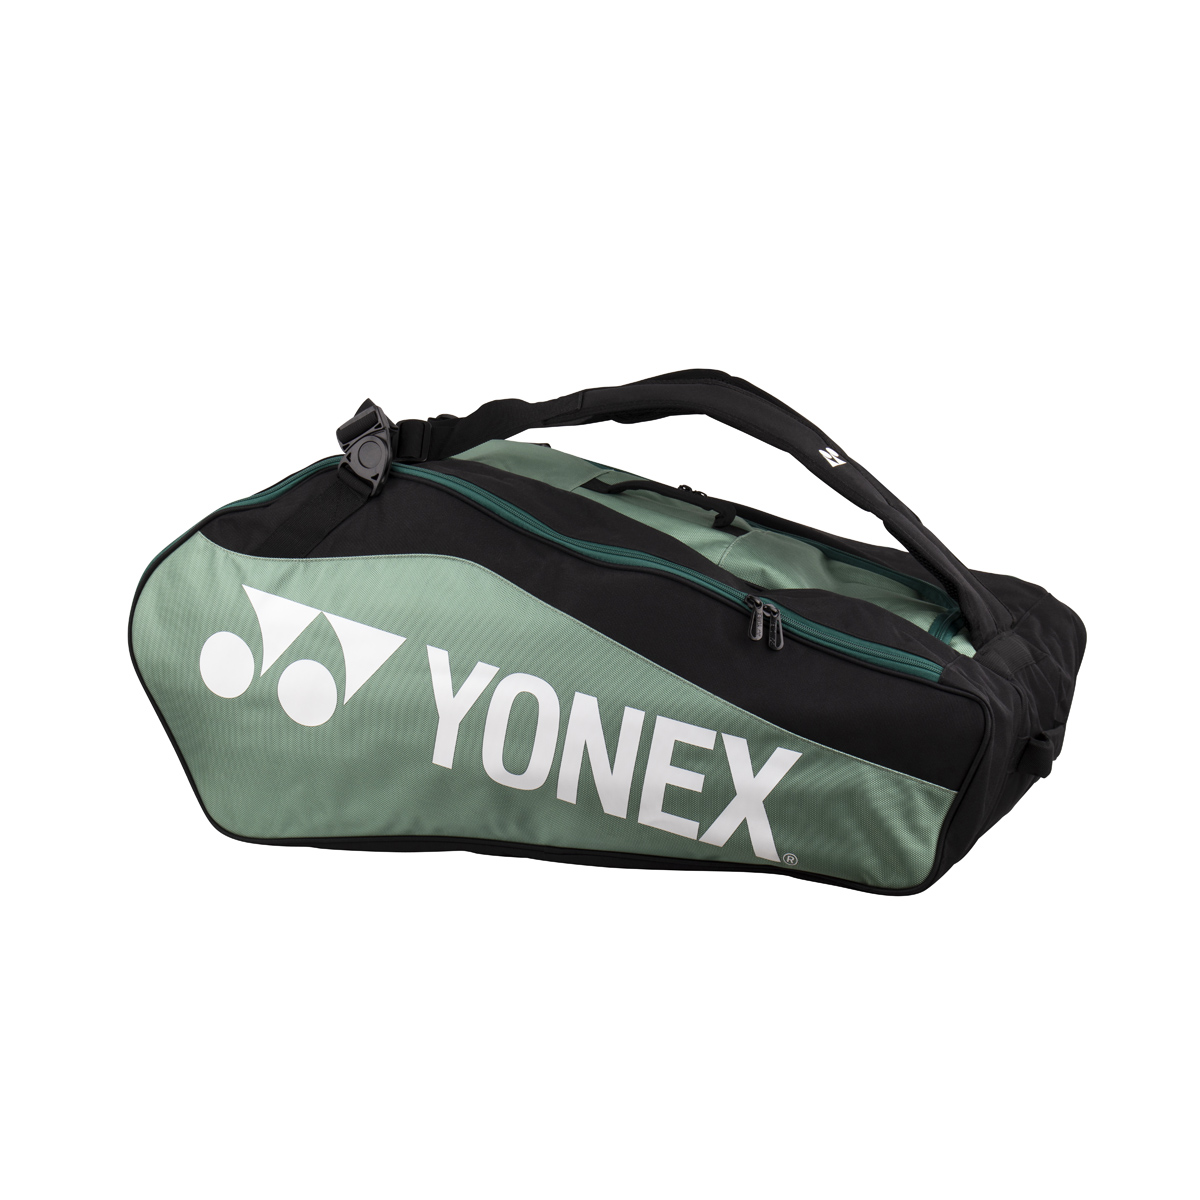 Yonex Club Line Tennistasche 12er green/black